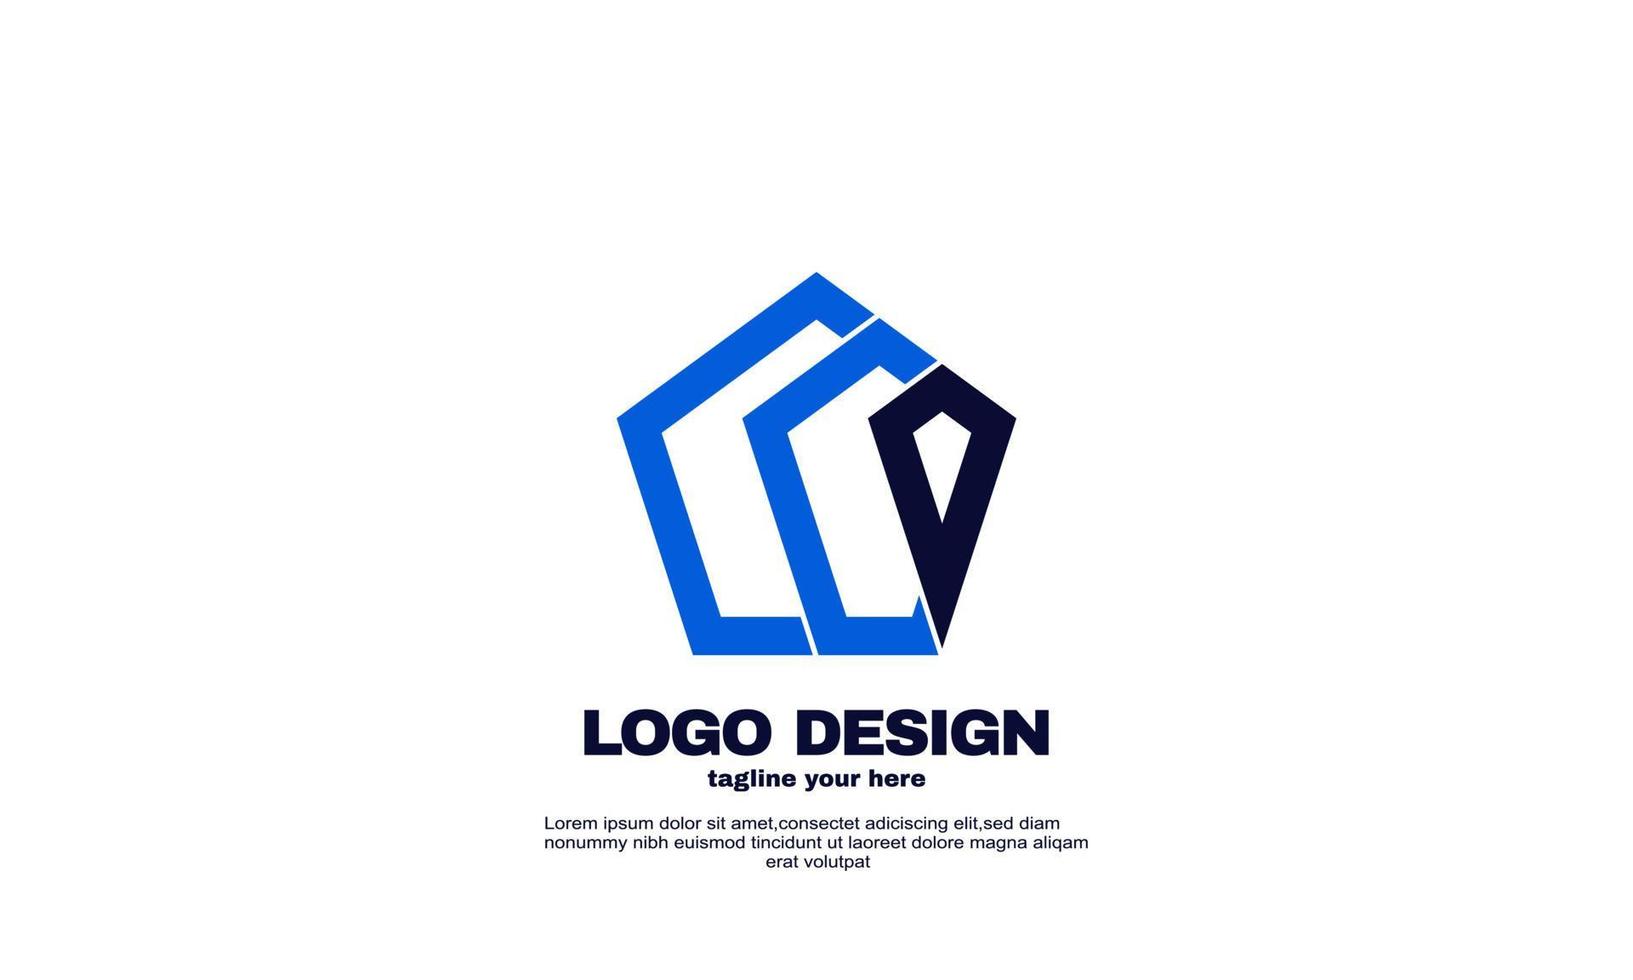 abstrato simples atraente identidade de marca logotipo de negócios da empresa vetor